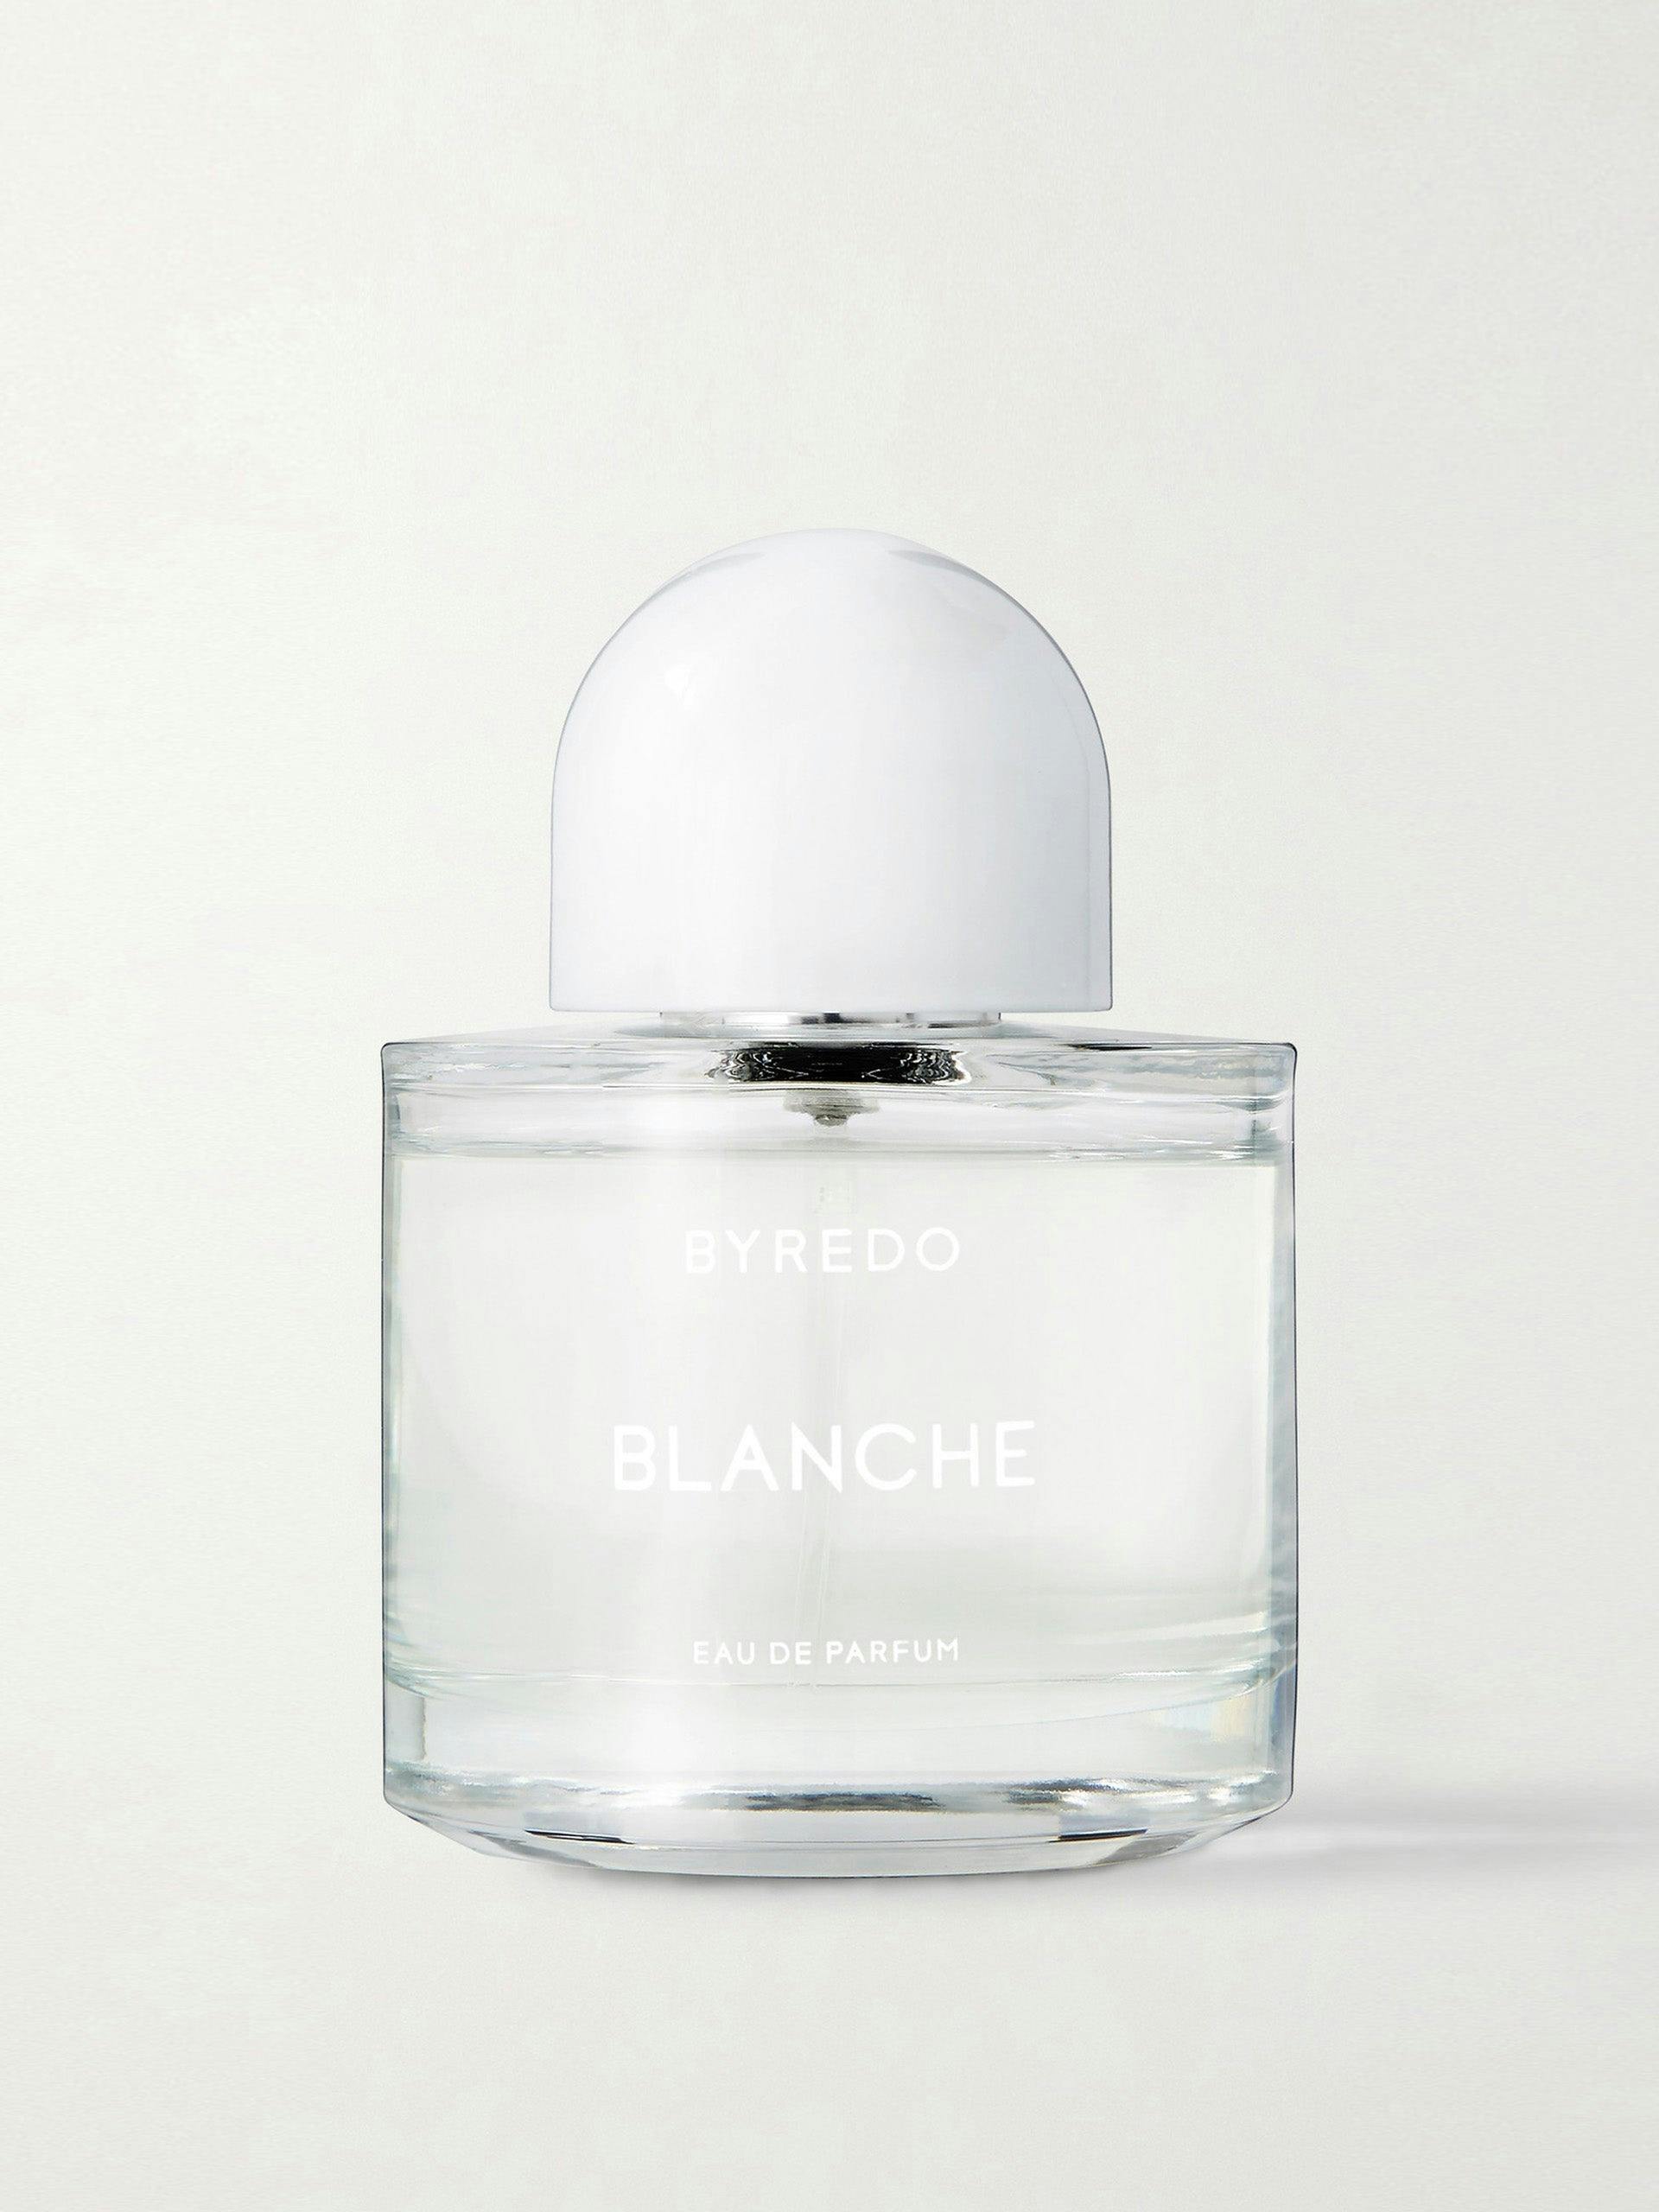 Blanche eau de parfum, collector’s edition